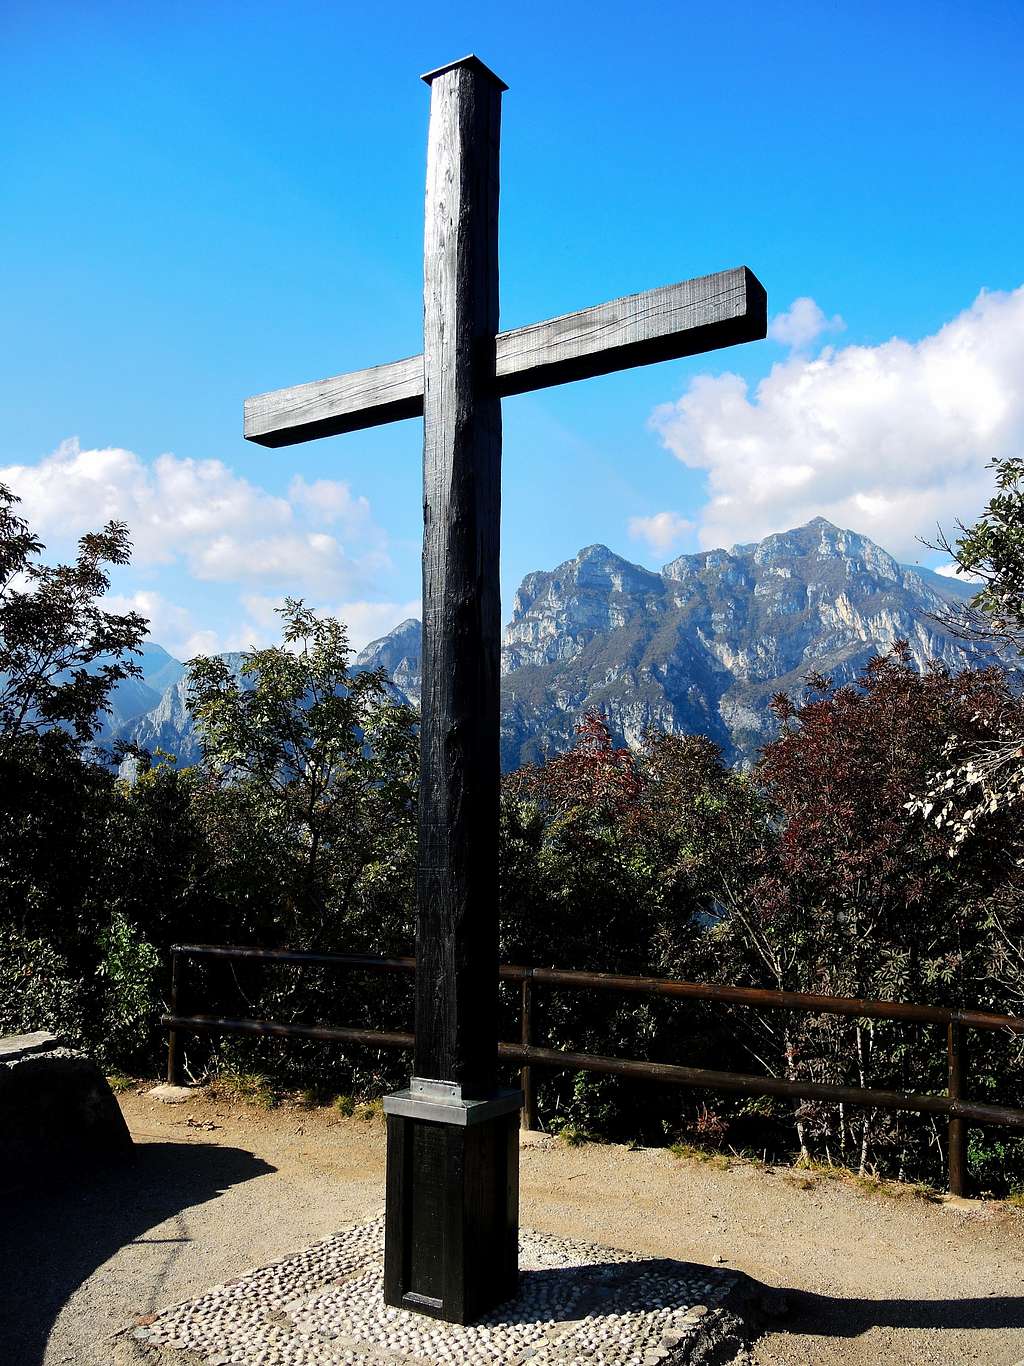 The cross of Monte Brione